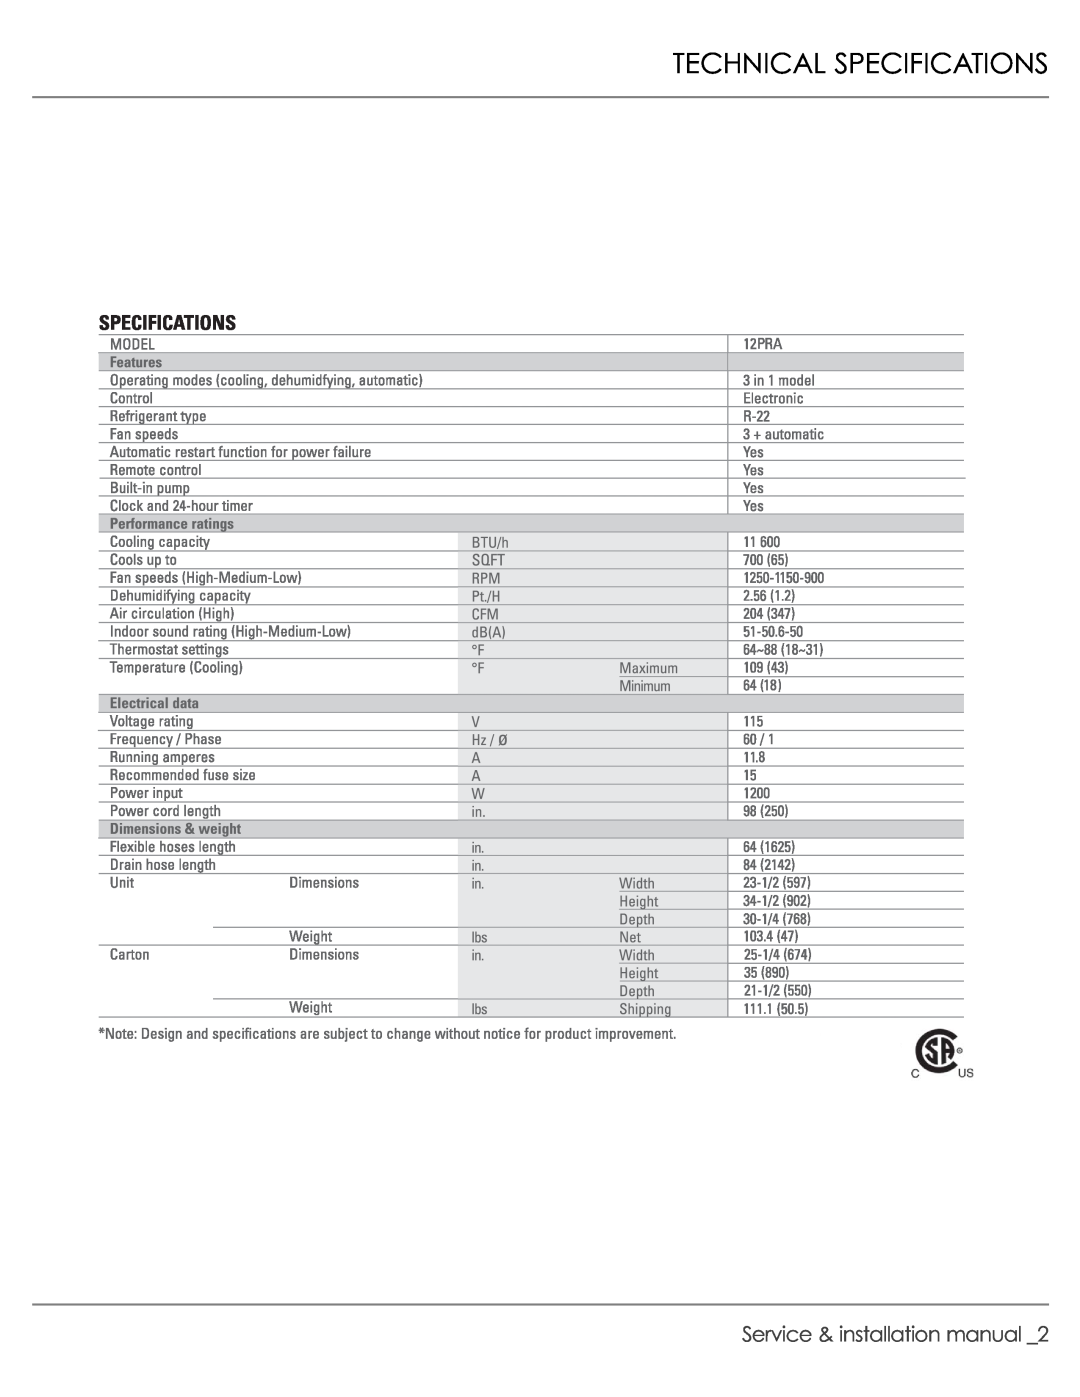 Alpine 12PRA Technical Specifications, Service & installation manual 